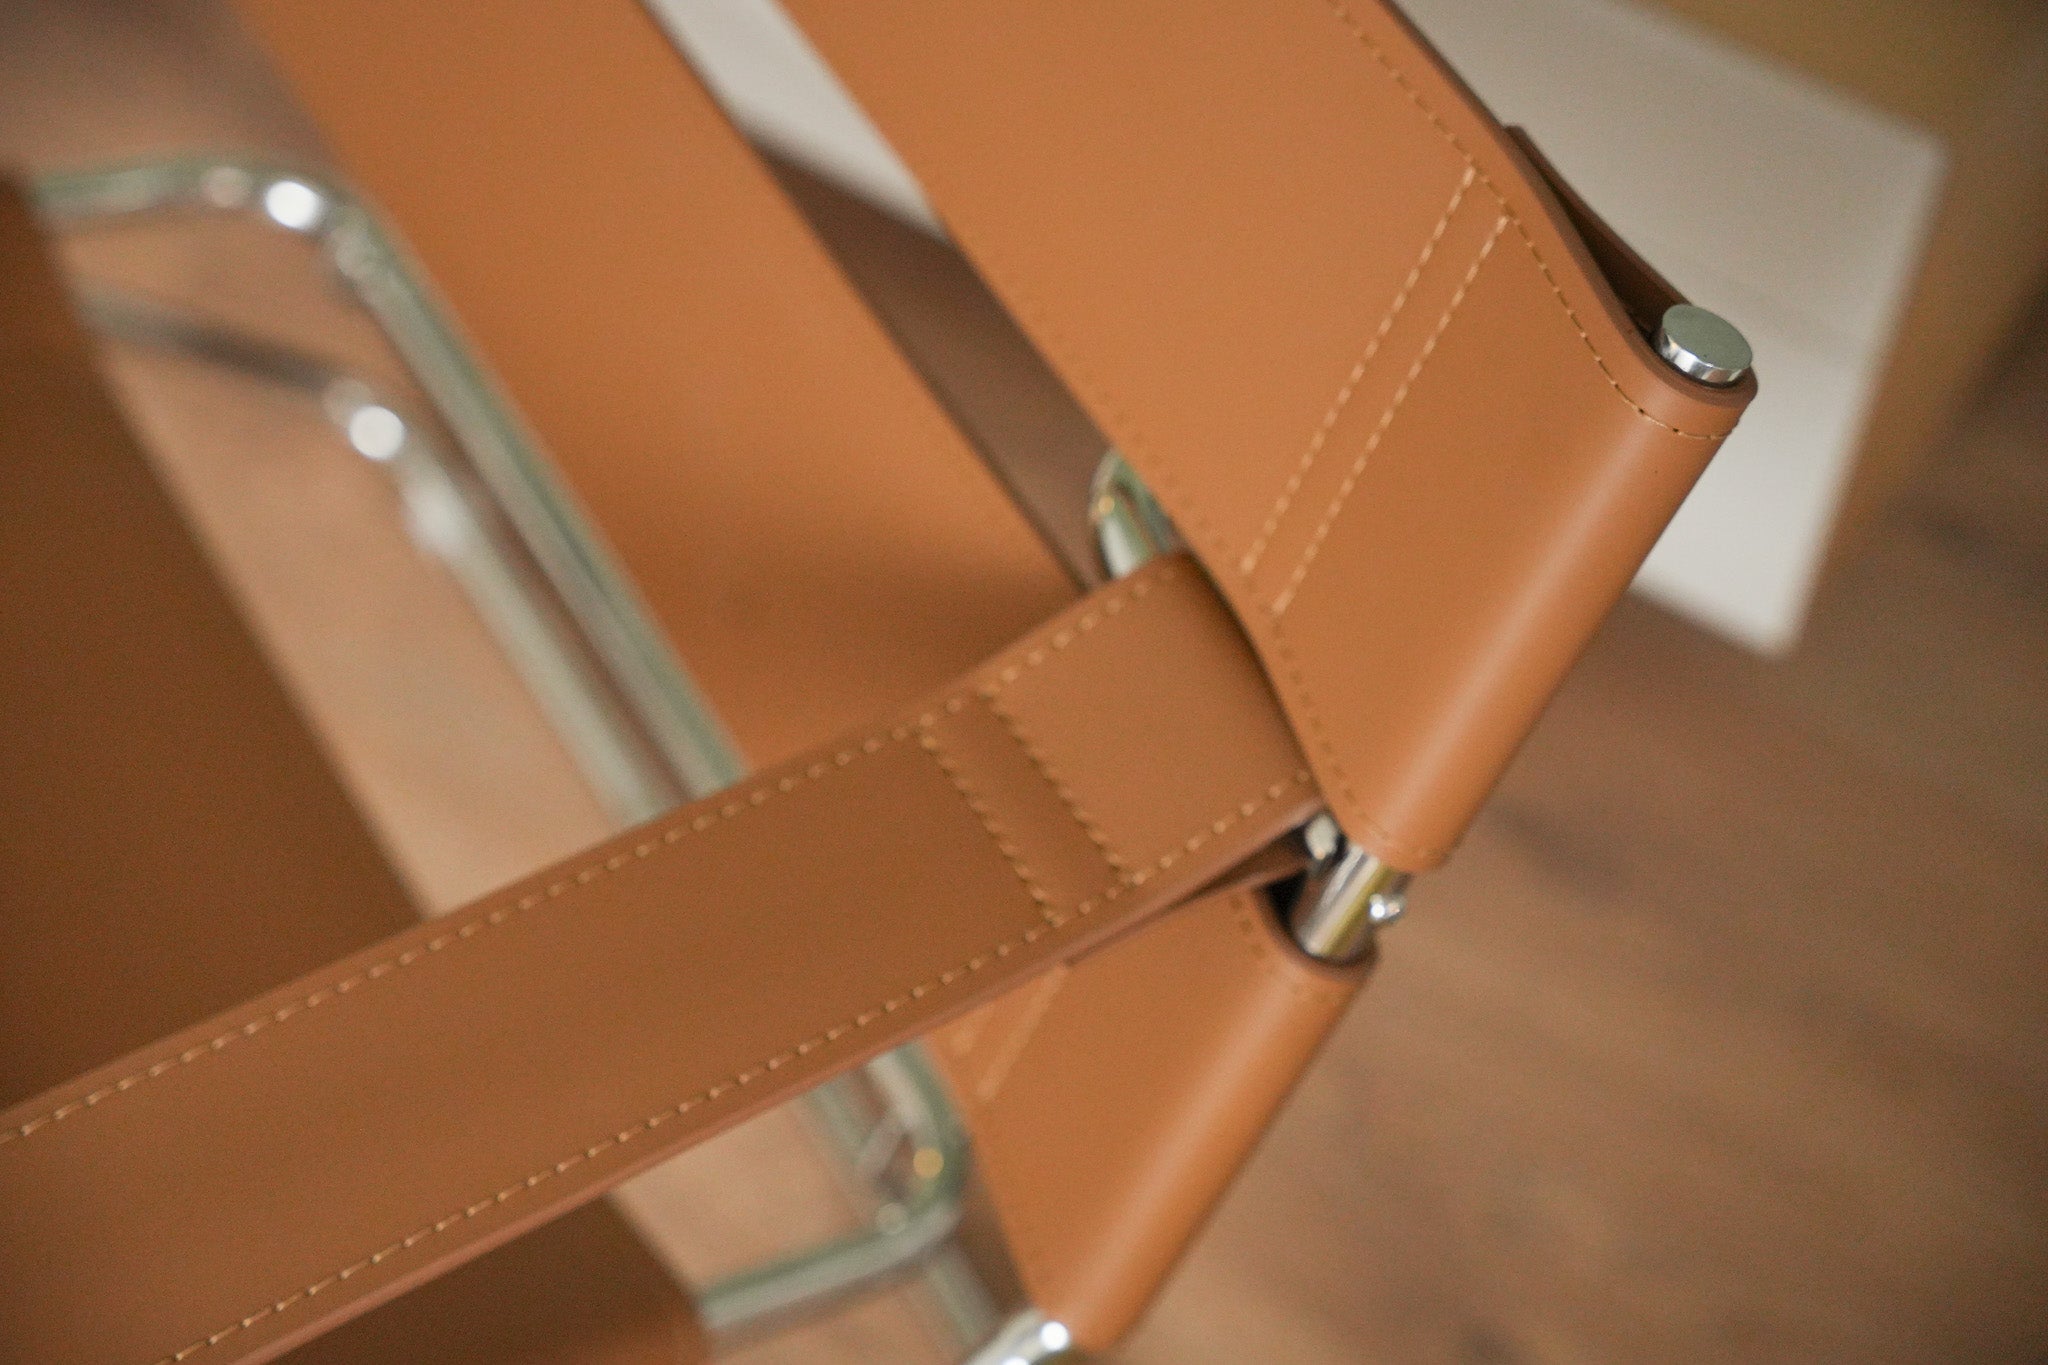 D4 Lounge Chair | Marcel Breuer Replica